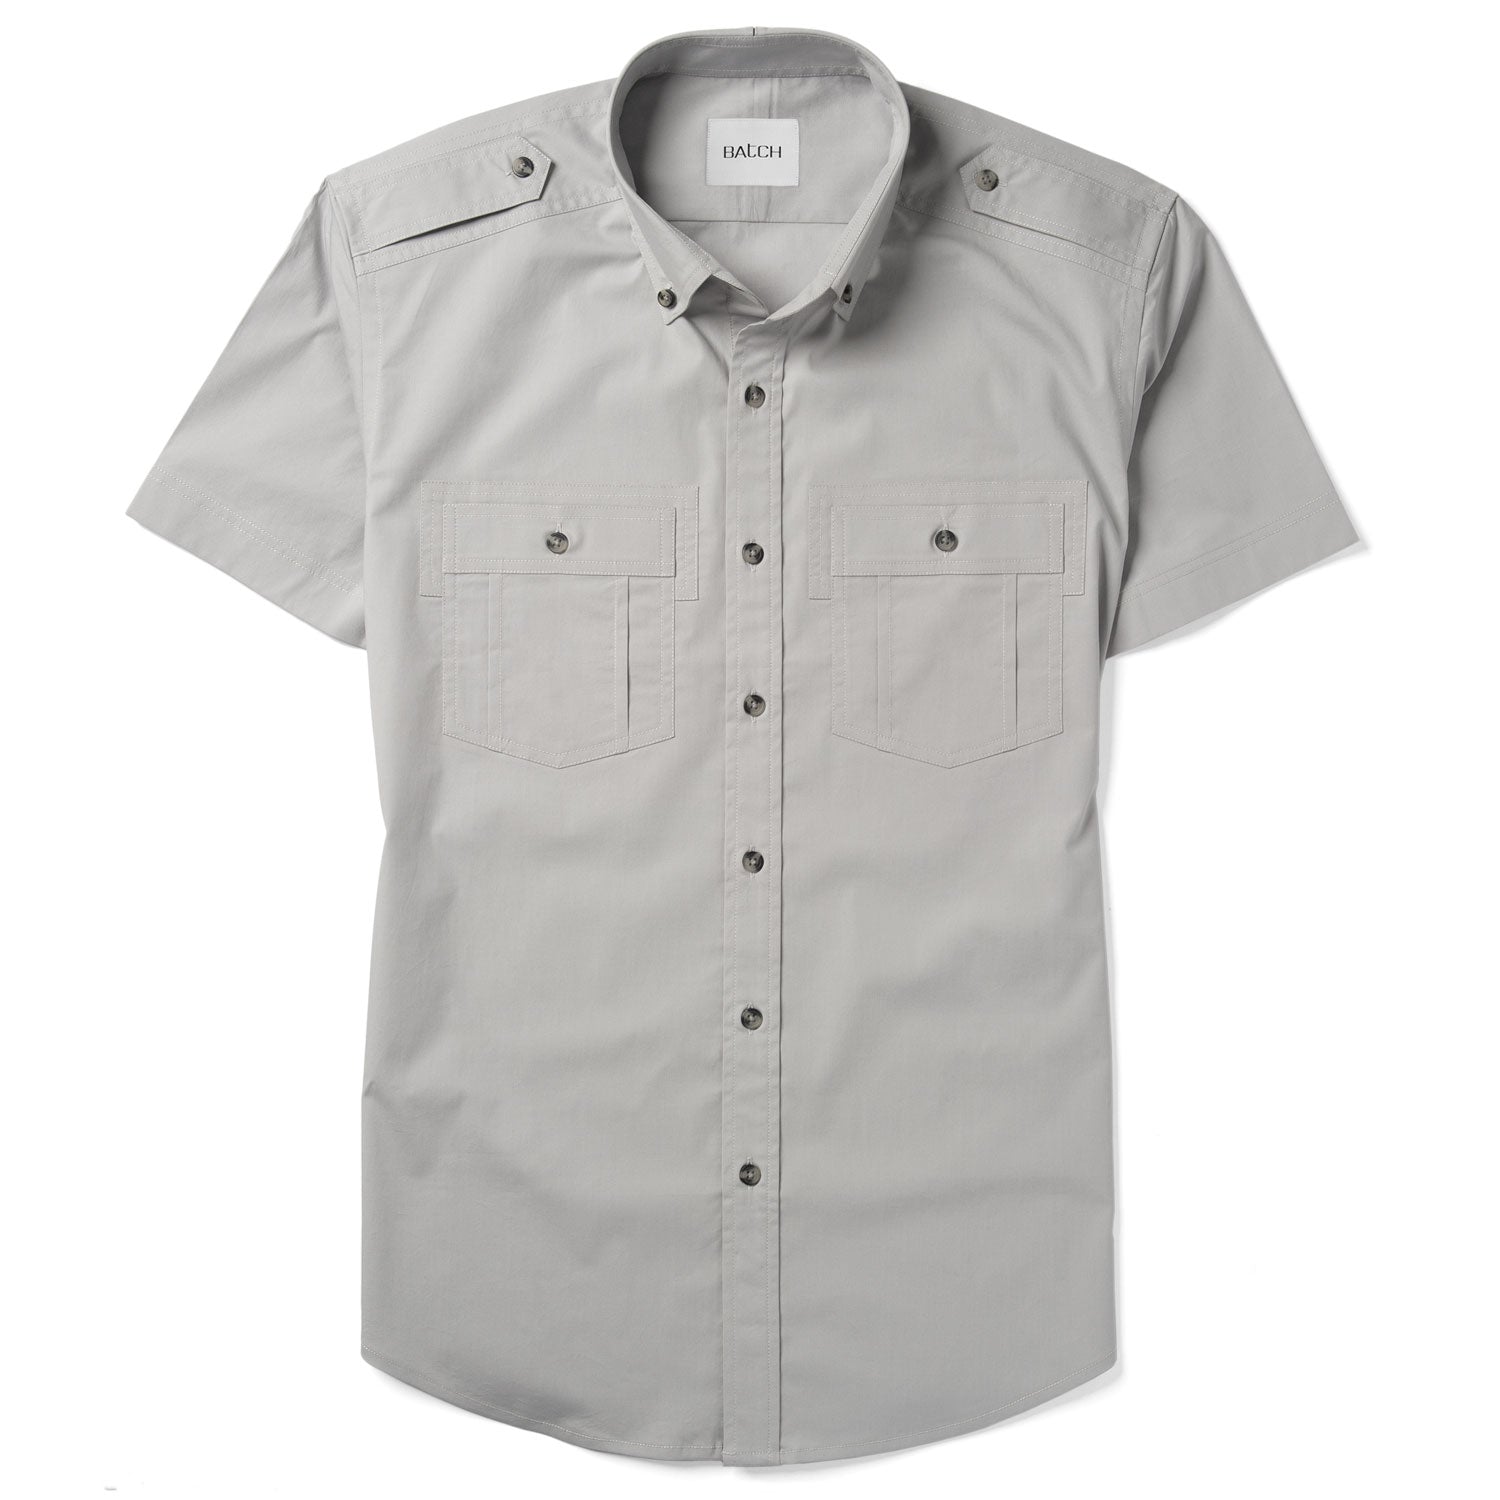 Finisher Short Sleeve Utility Shirt – Aluminum Gray Stretch Cotton Poplin